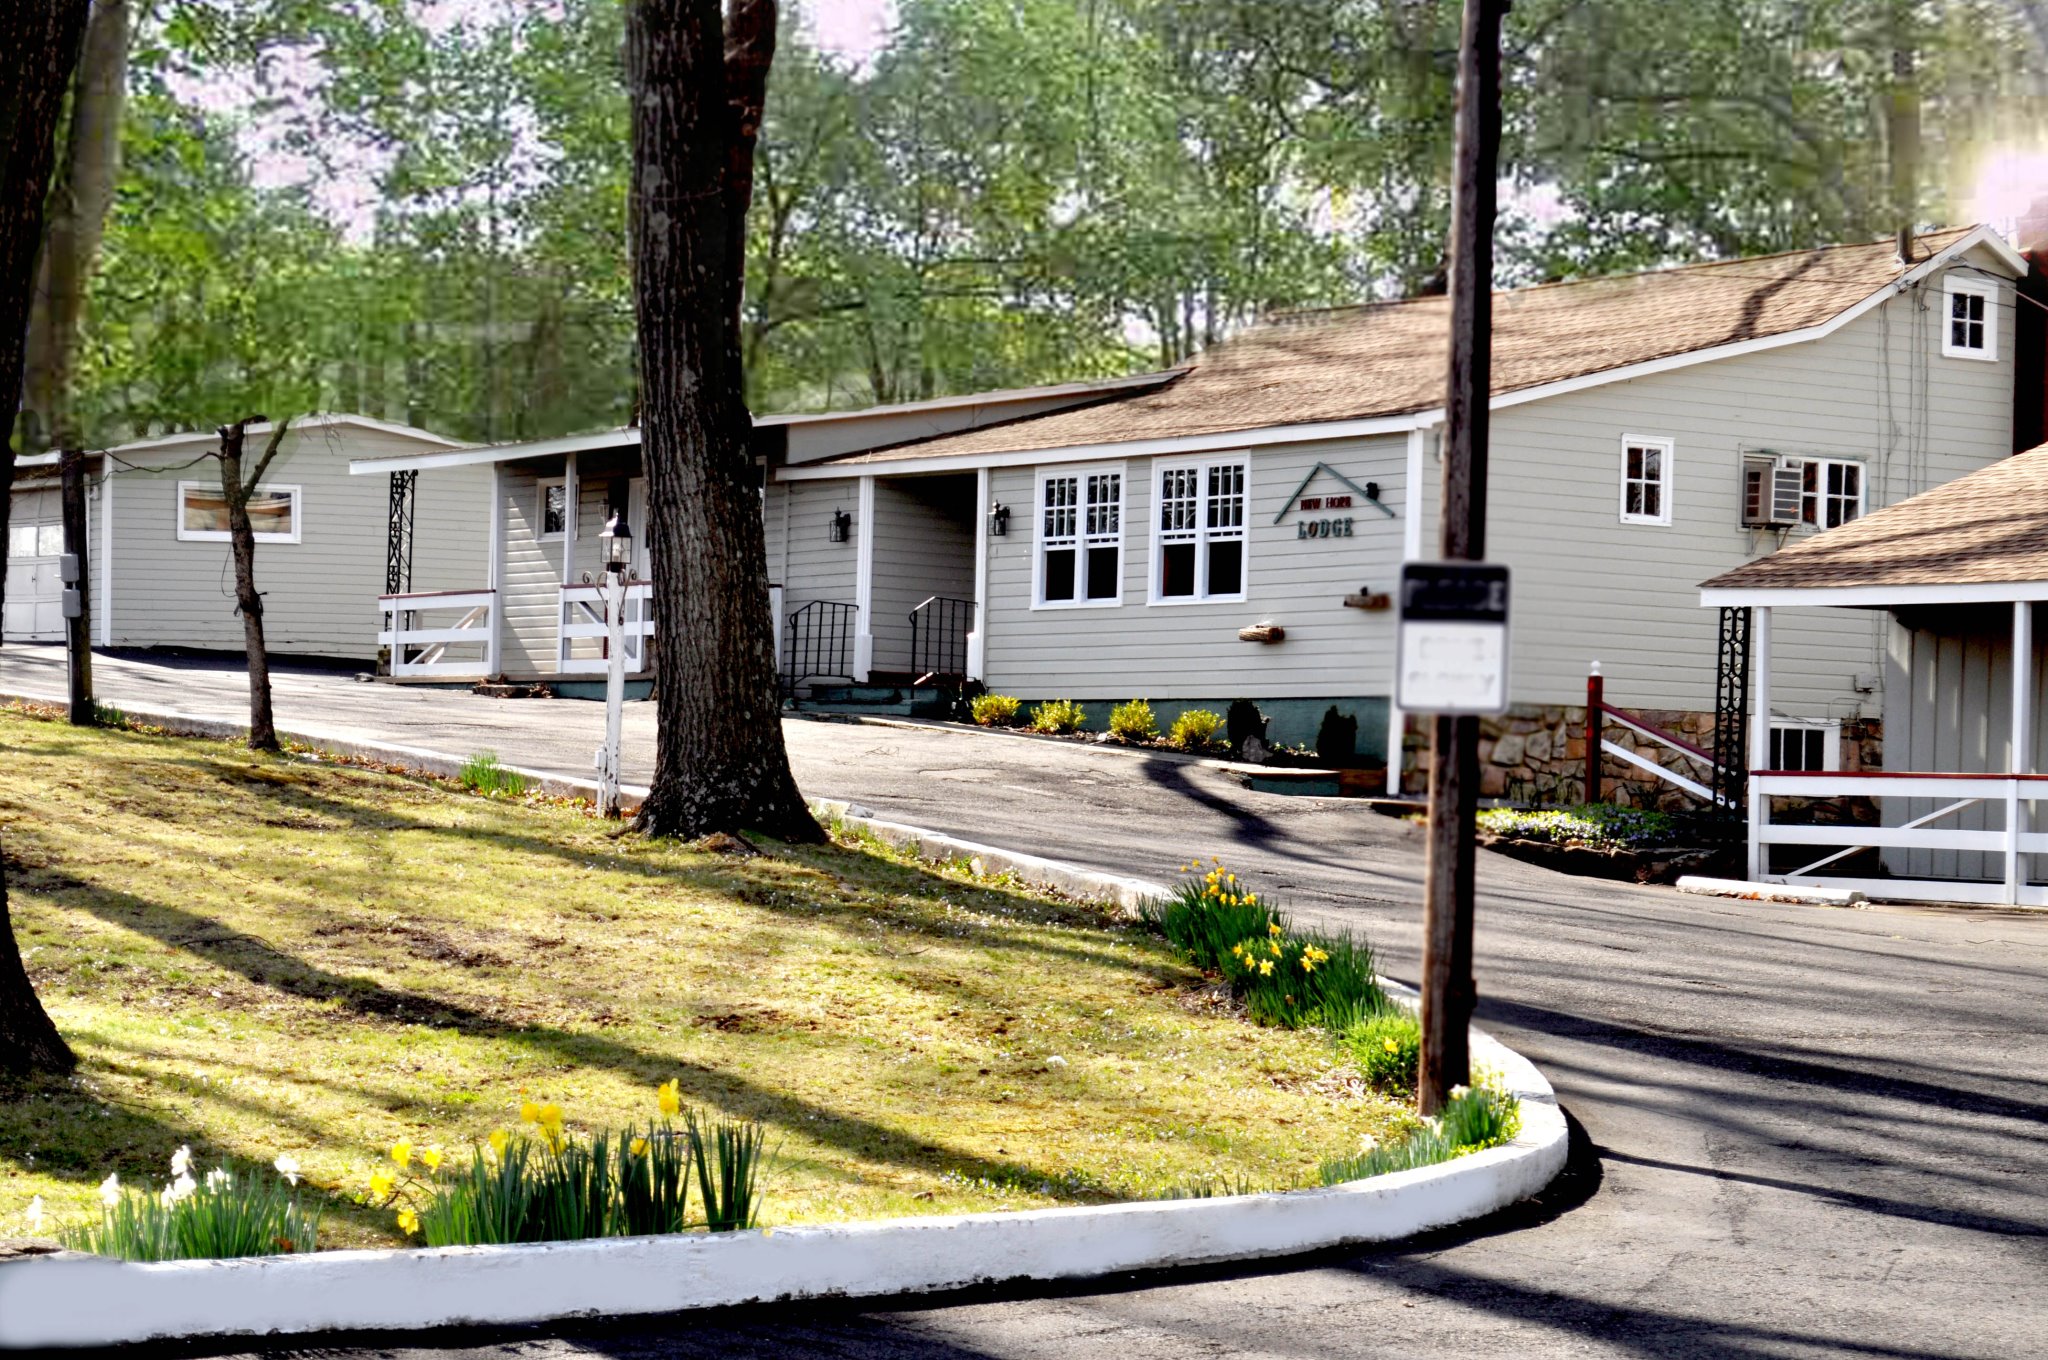 New Hope Lodge Accommodations in Bucks County, PA